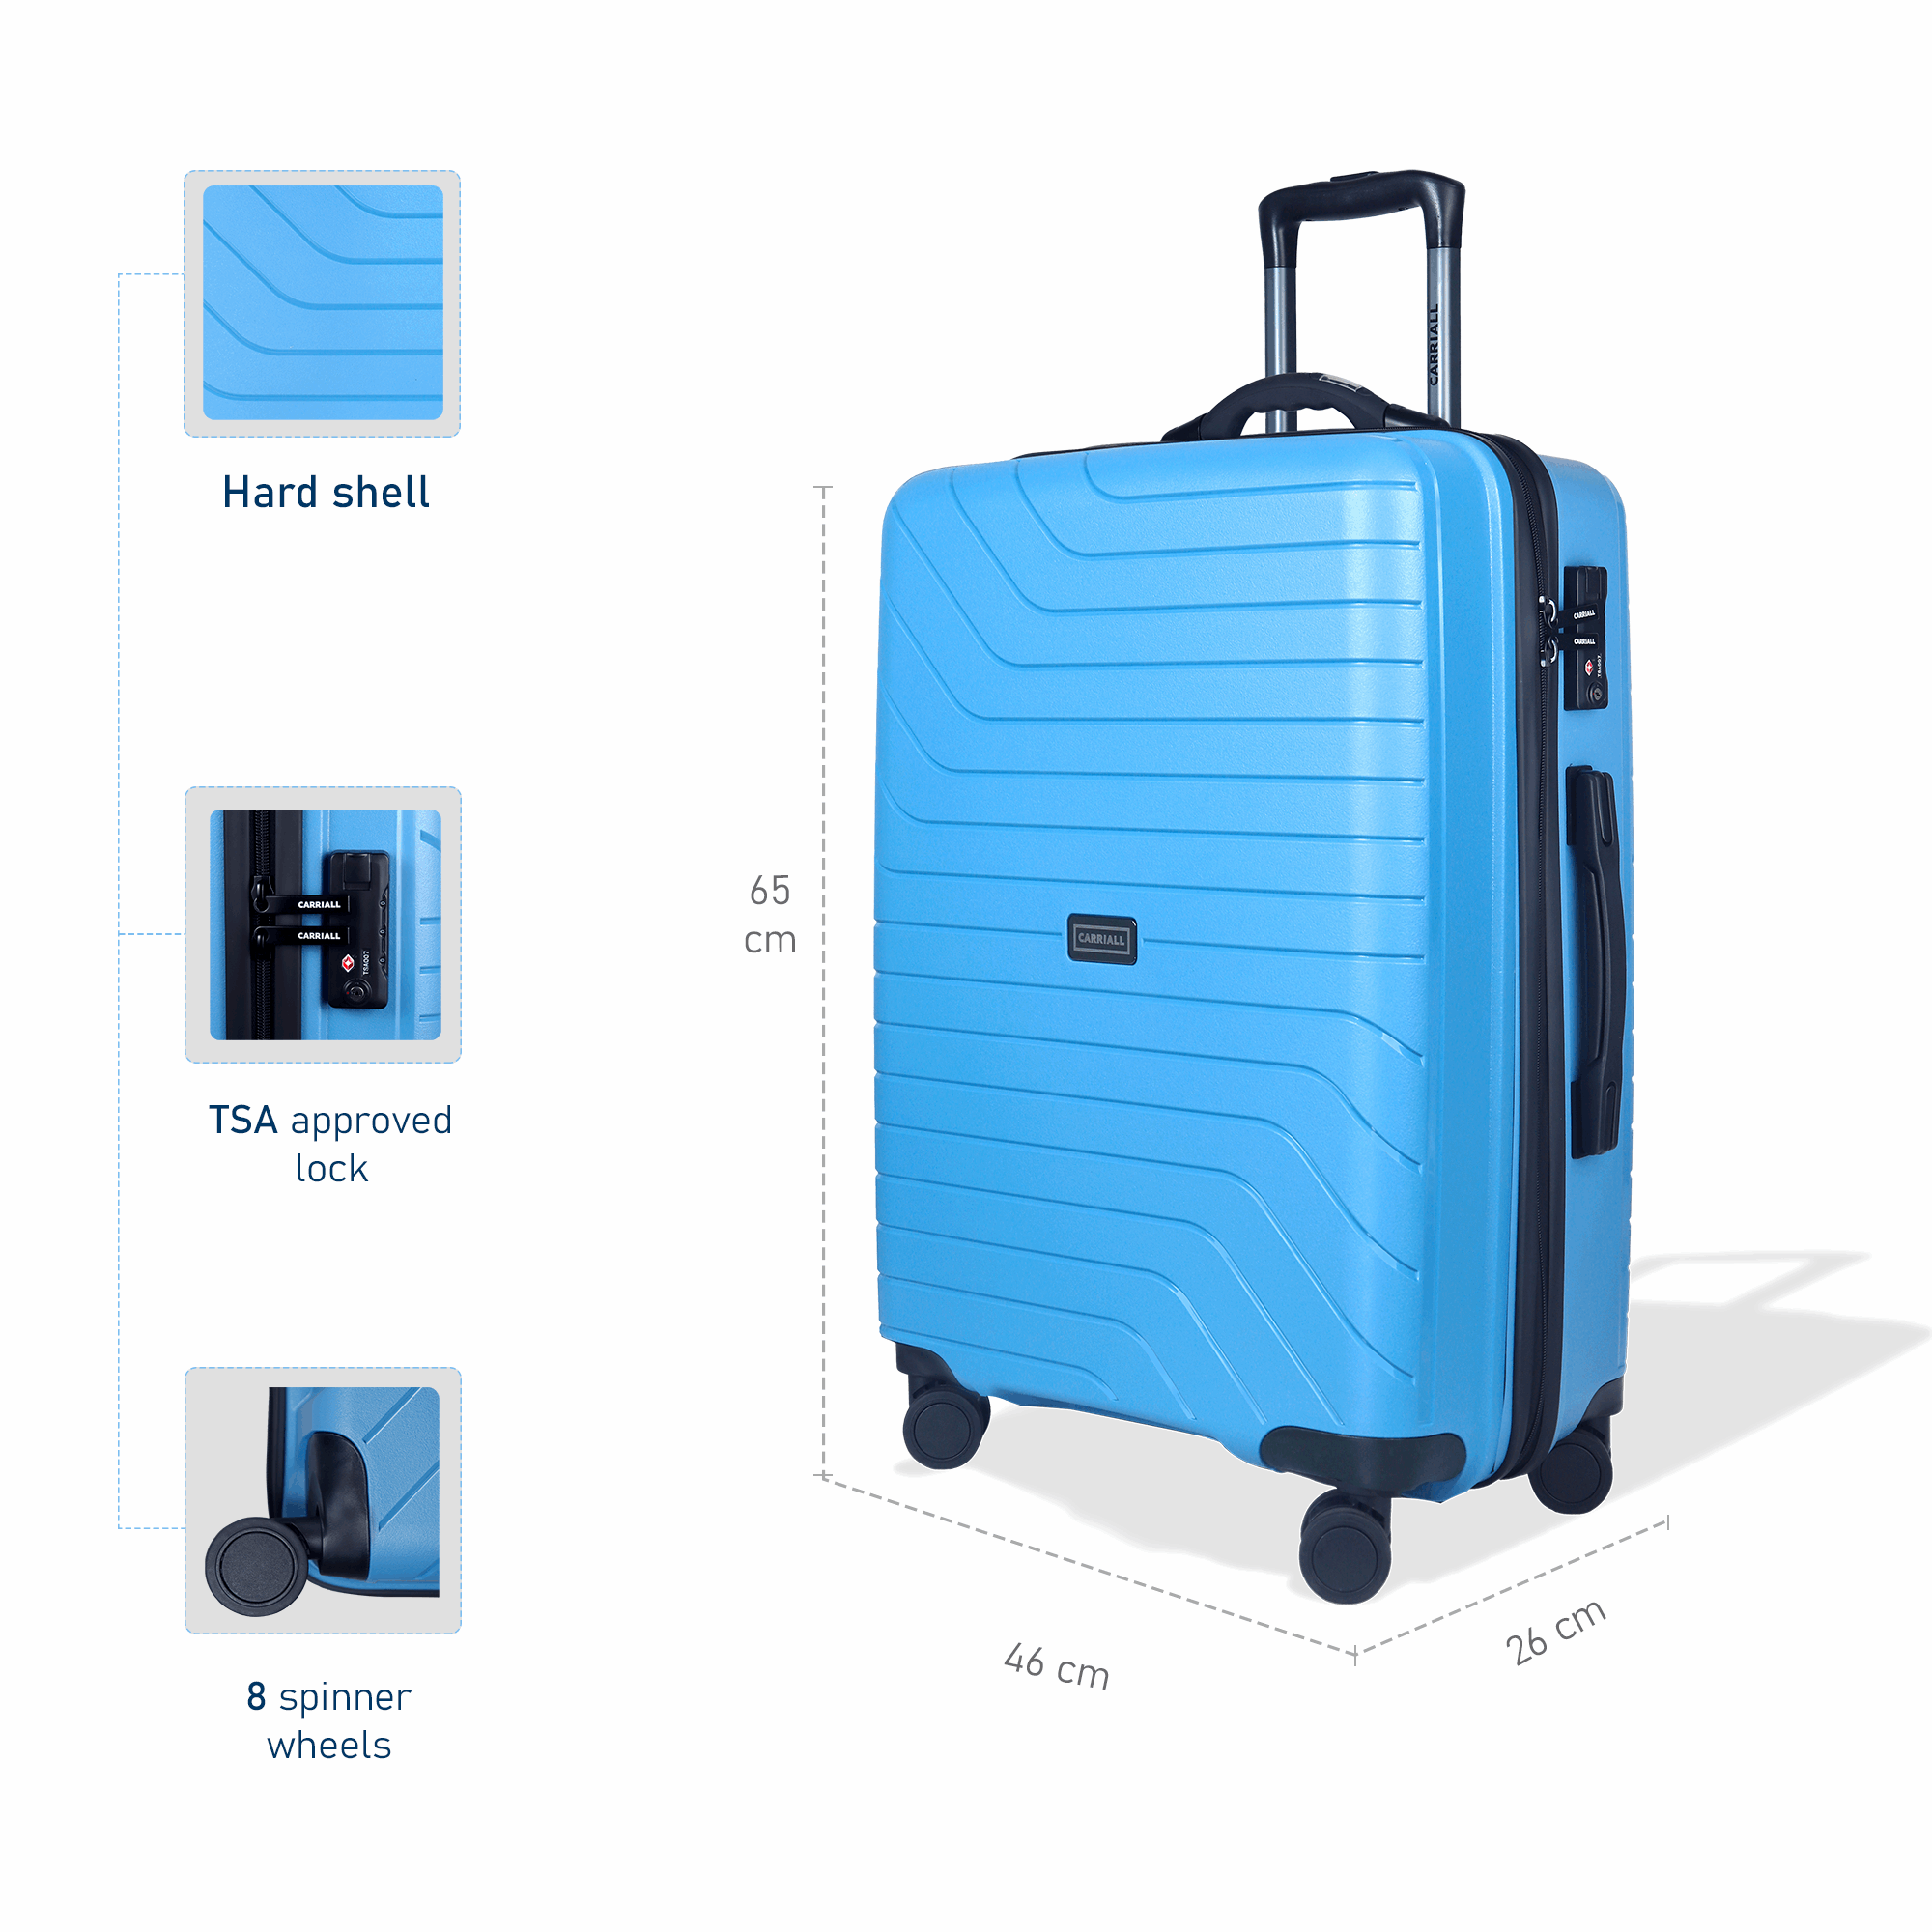 Groove Smart luggage